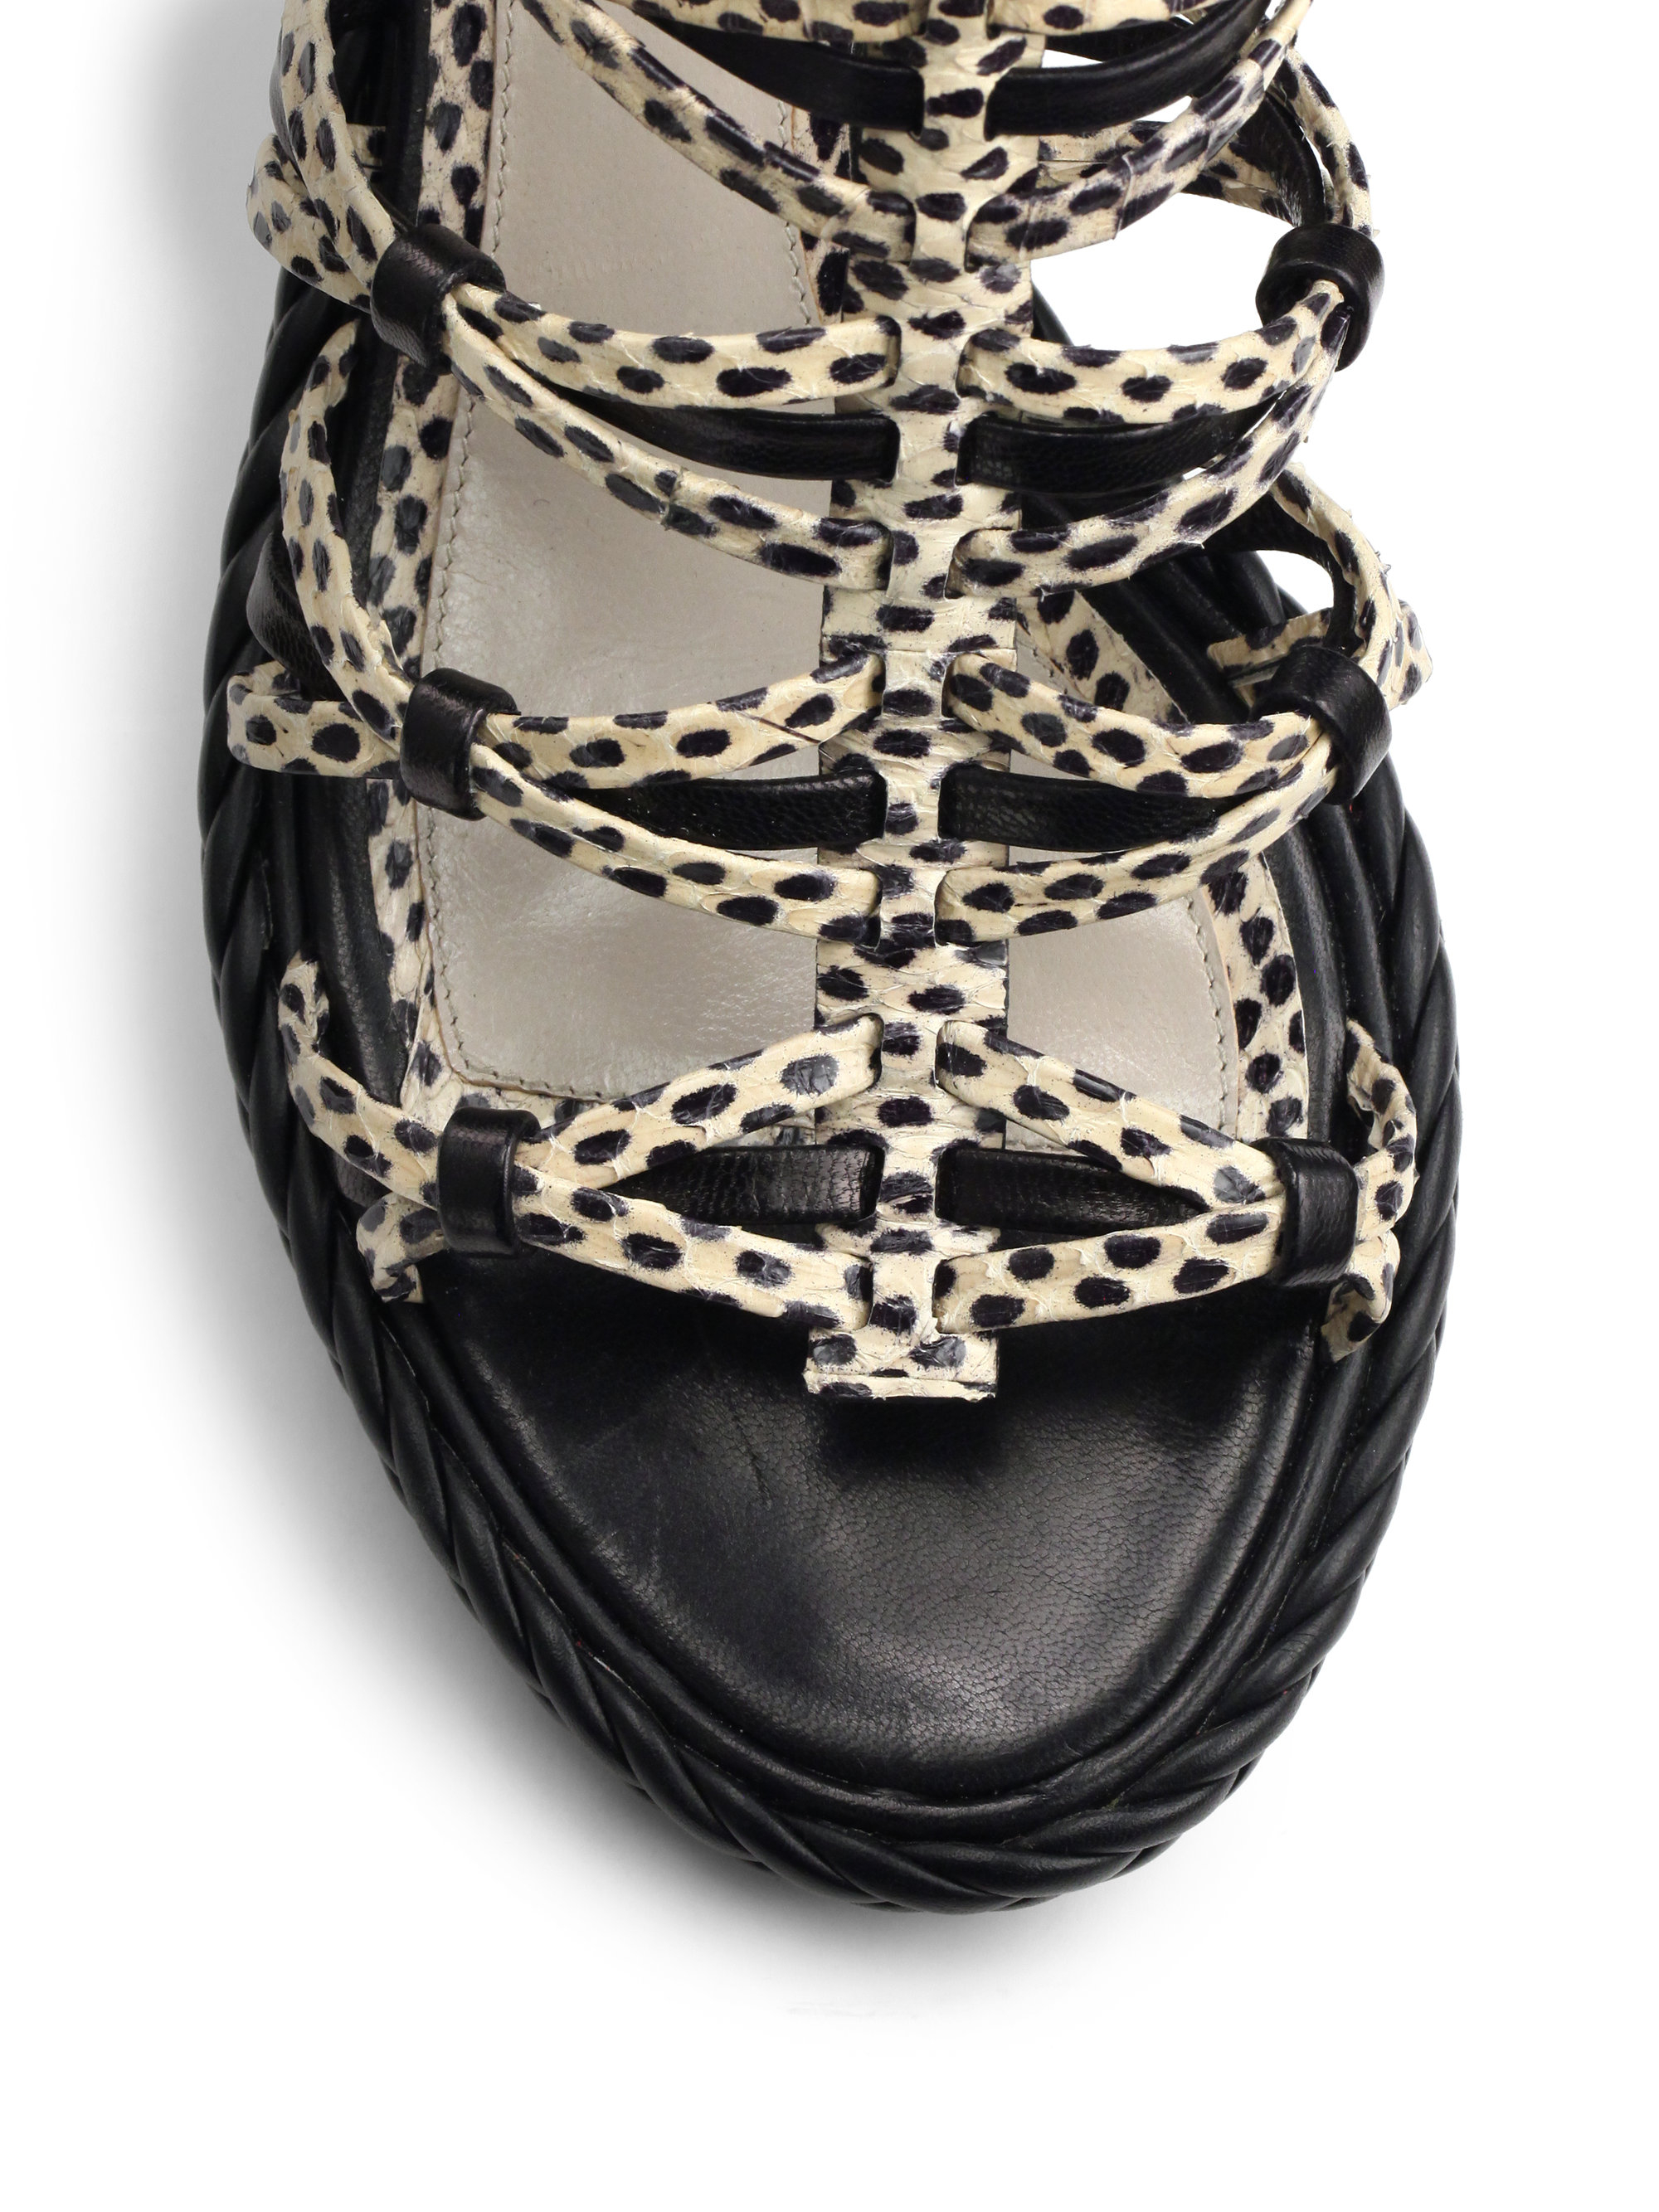 Lyst - Jason Wu Strappy Snakeskin Leather Braided Sandals